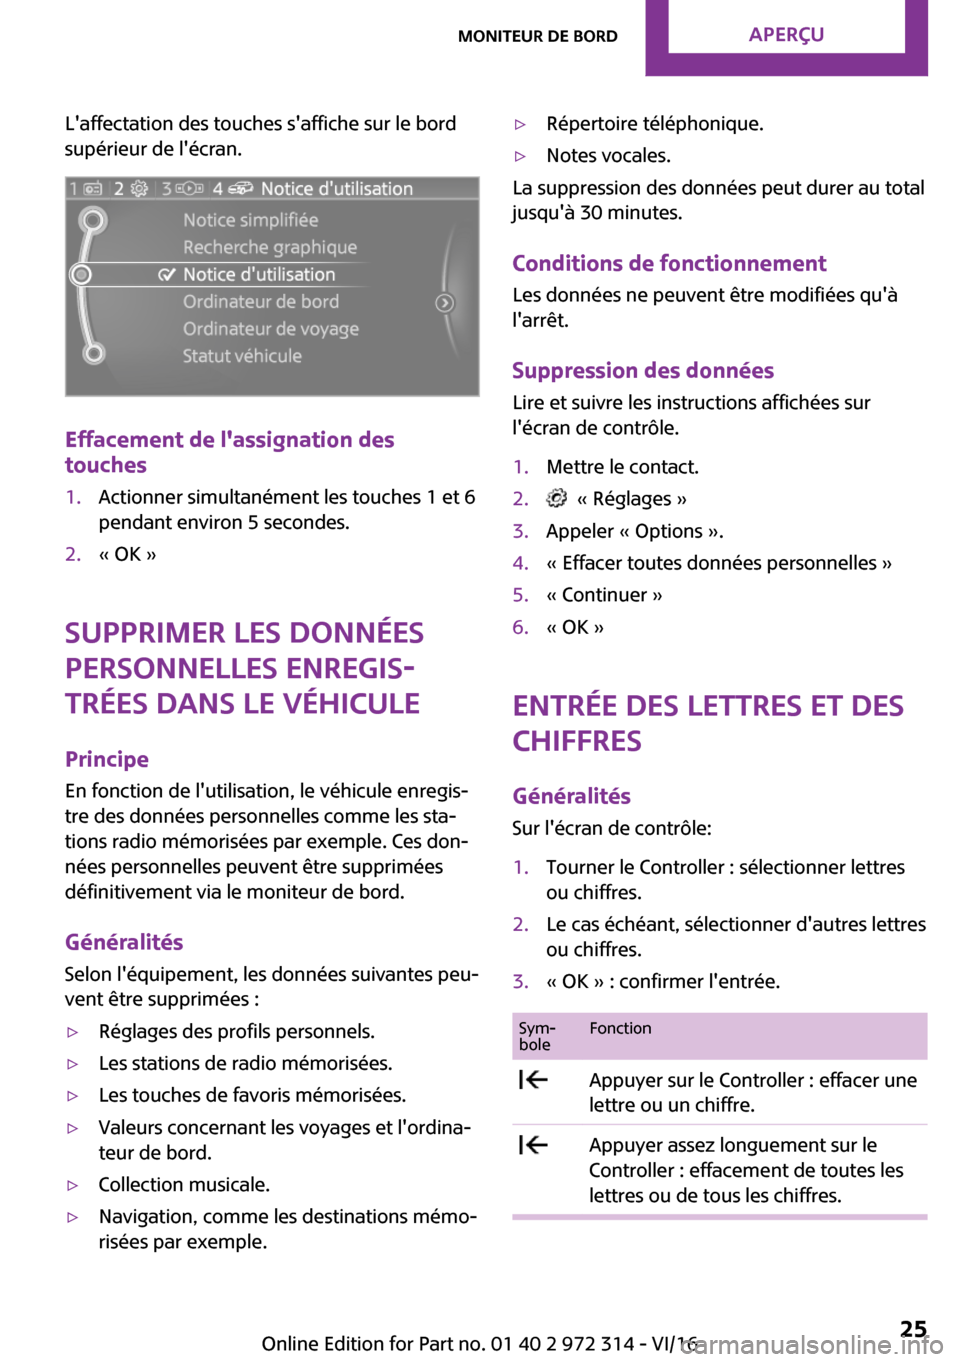 MINI 3 door 2016  Manuel du propriétaire (in French) �L��a�f�f�e�c�t�a�t�i�o�n� �d�e�s� �t�o�u�c�h�e�s� �s��a�f�f�i�c�h�e� �s�u�r� �l�e� �b�o�r�d
�s�u�p�é�r�i�e�u�r� �d�e� �l��é�c�r�a�n�.
�E�f�f�a�c�e�m�e�n�t��d�e��l��a�s�s�i�g�n�a�t�i�o�n��d�e